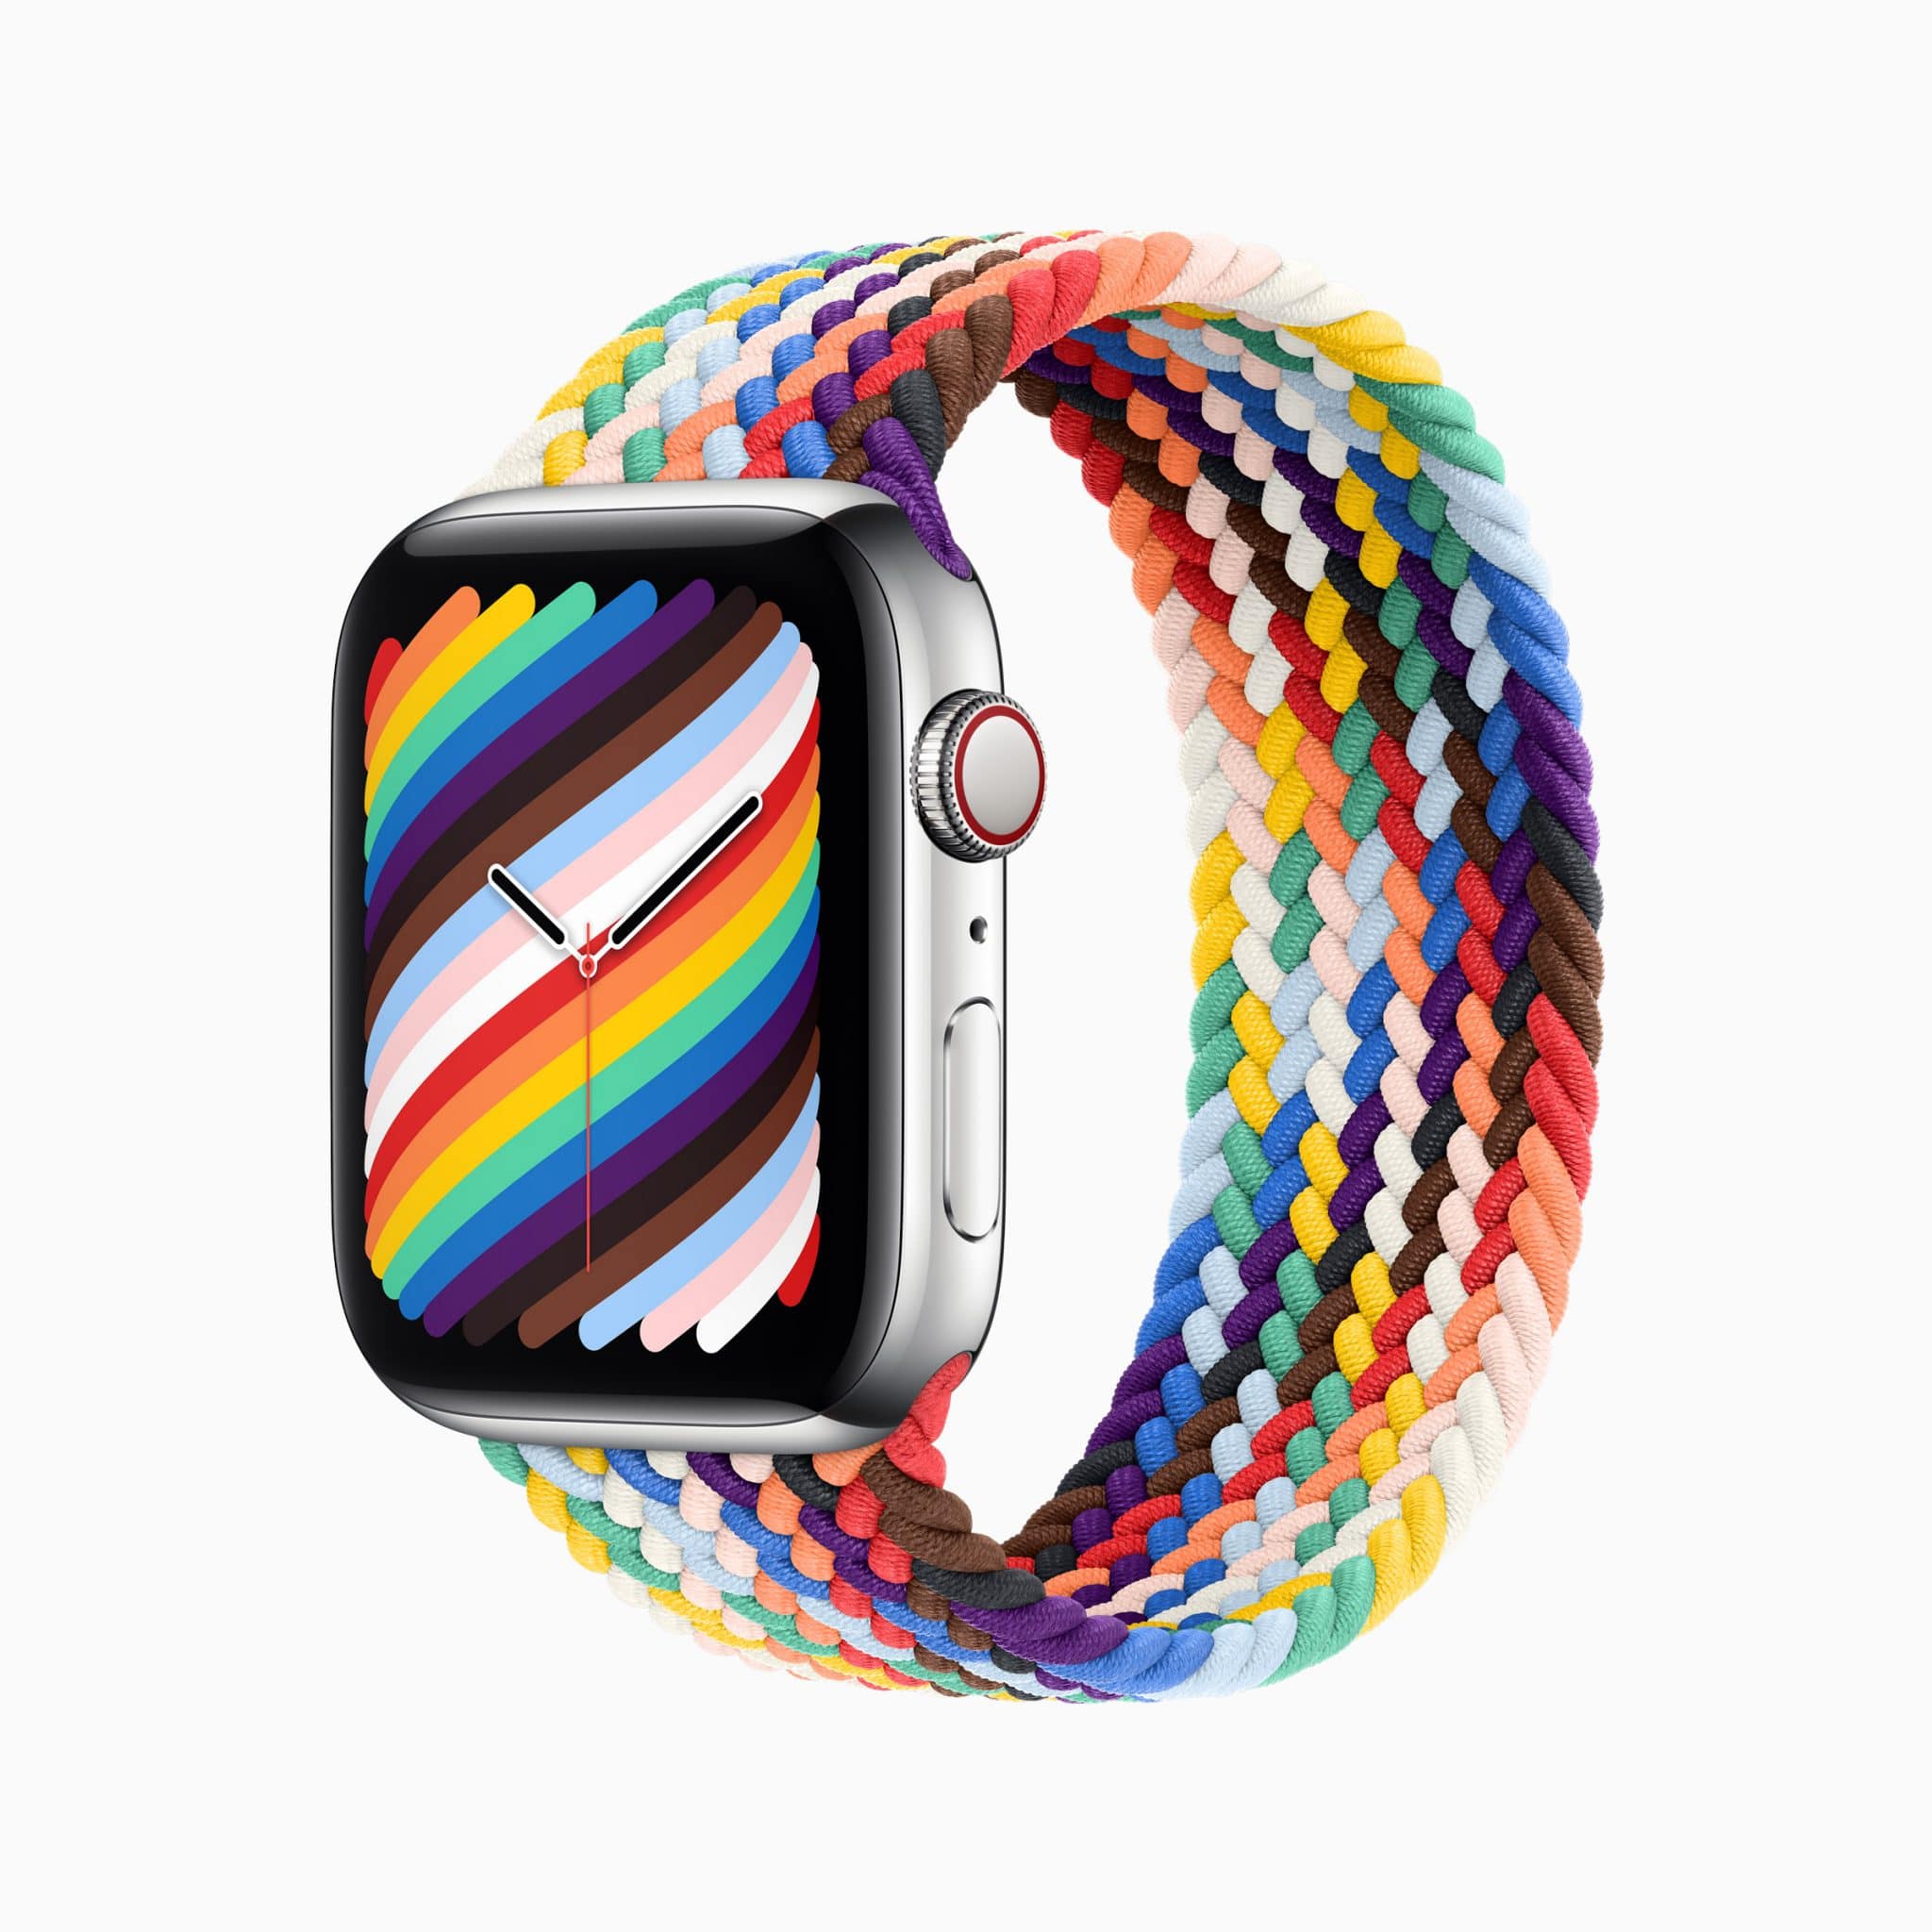 Apple Watch Pride 2021 Watch Face